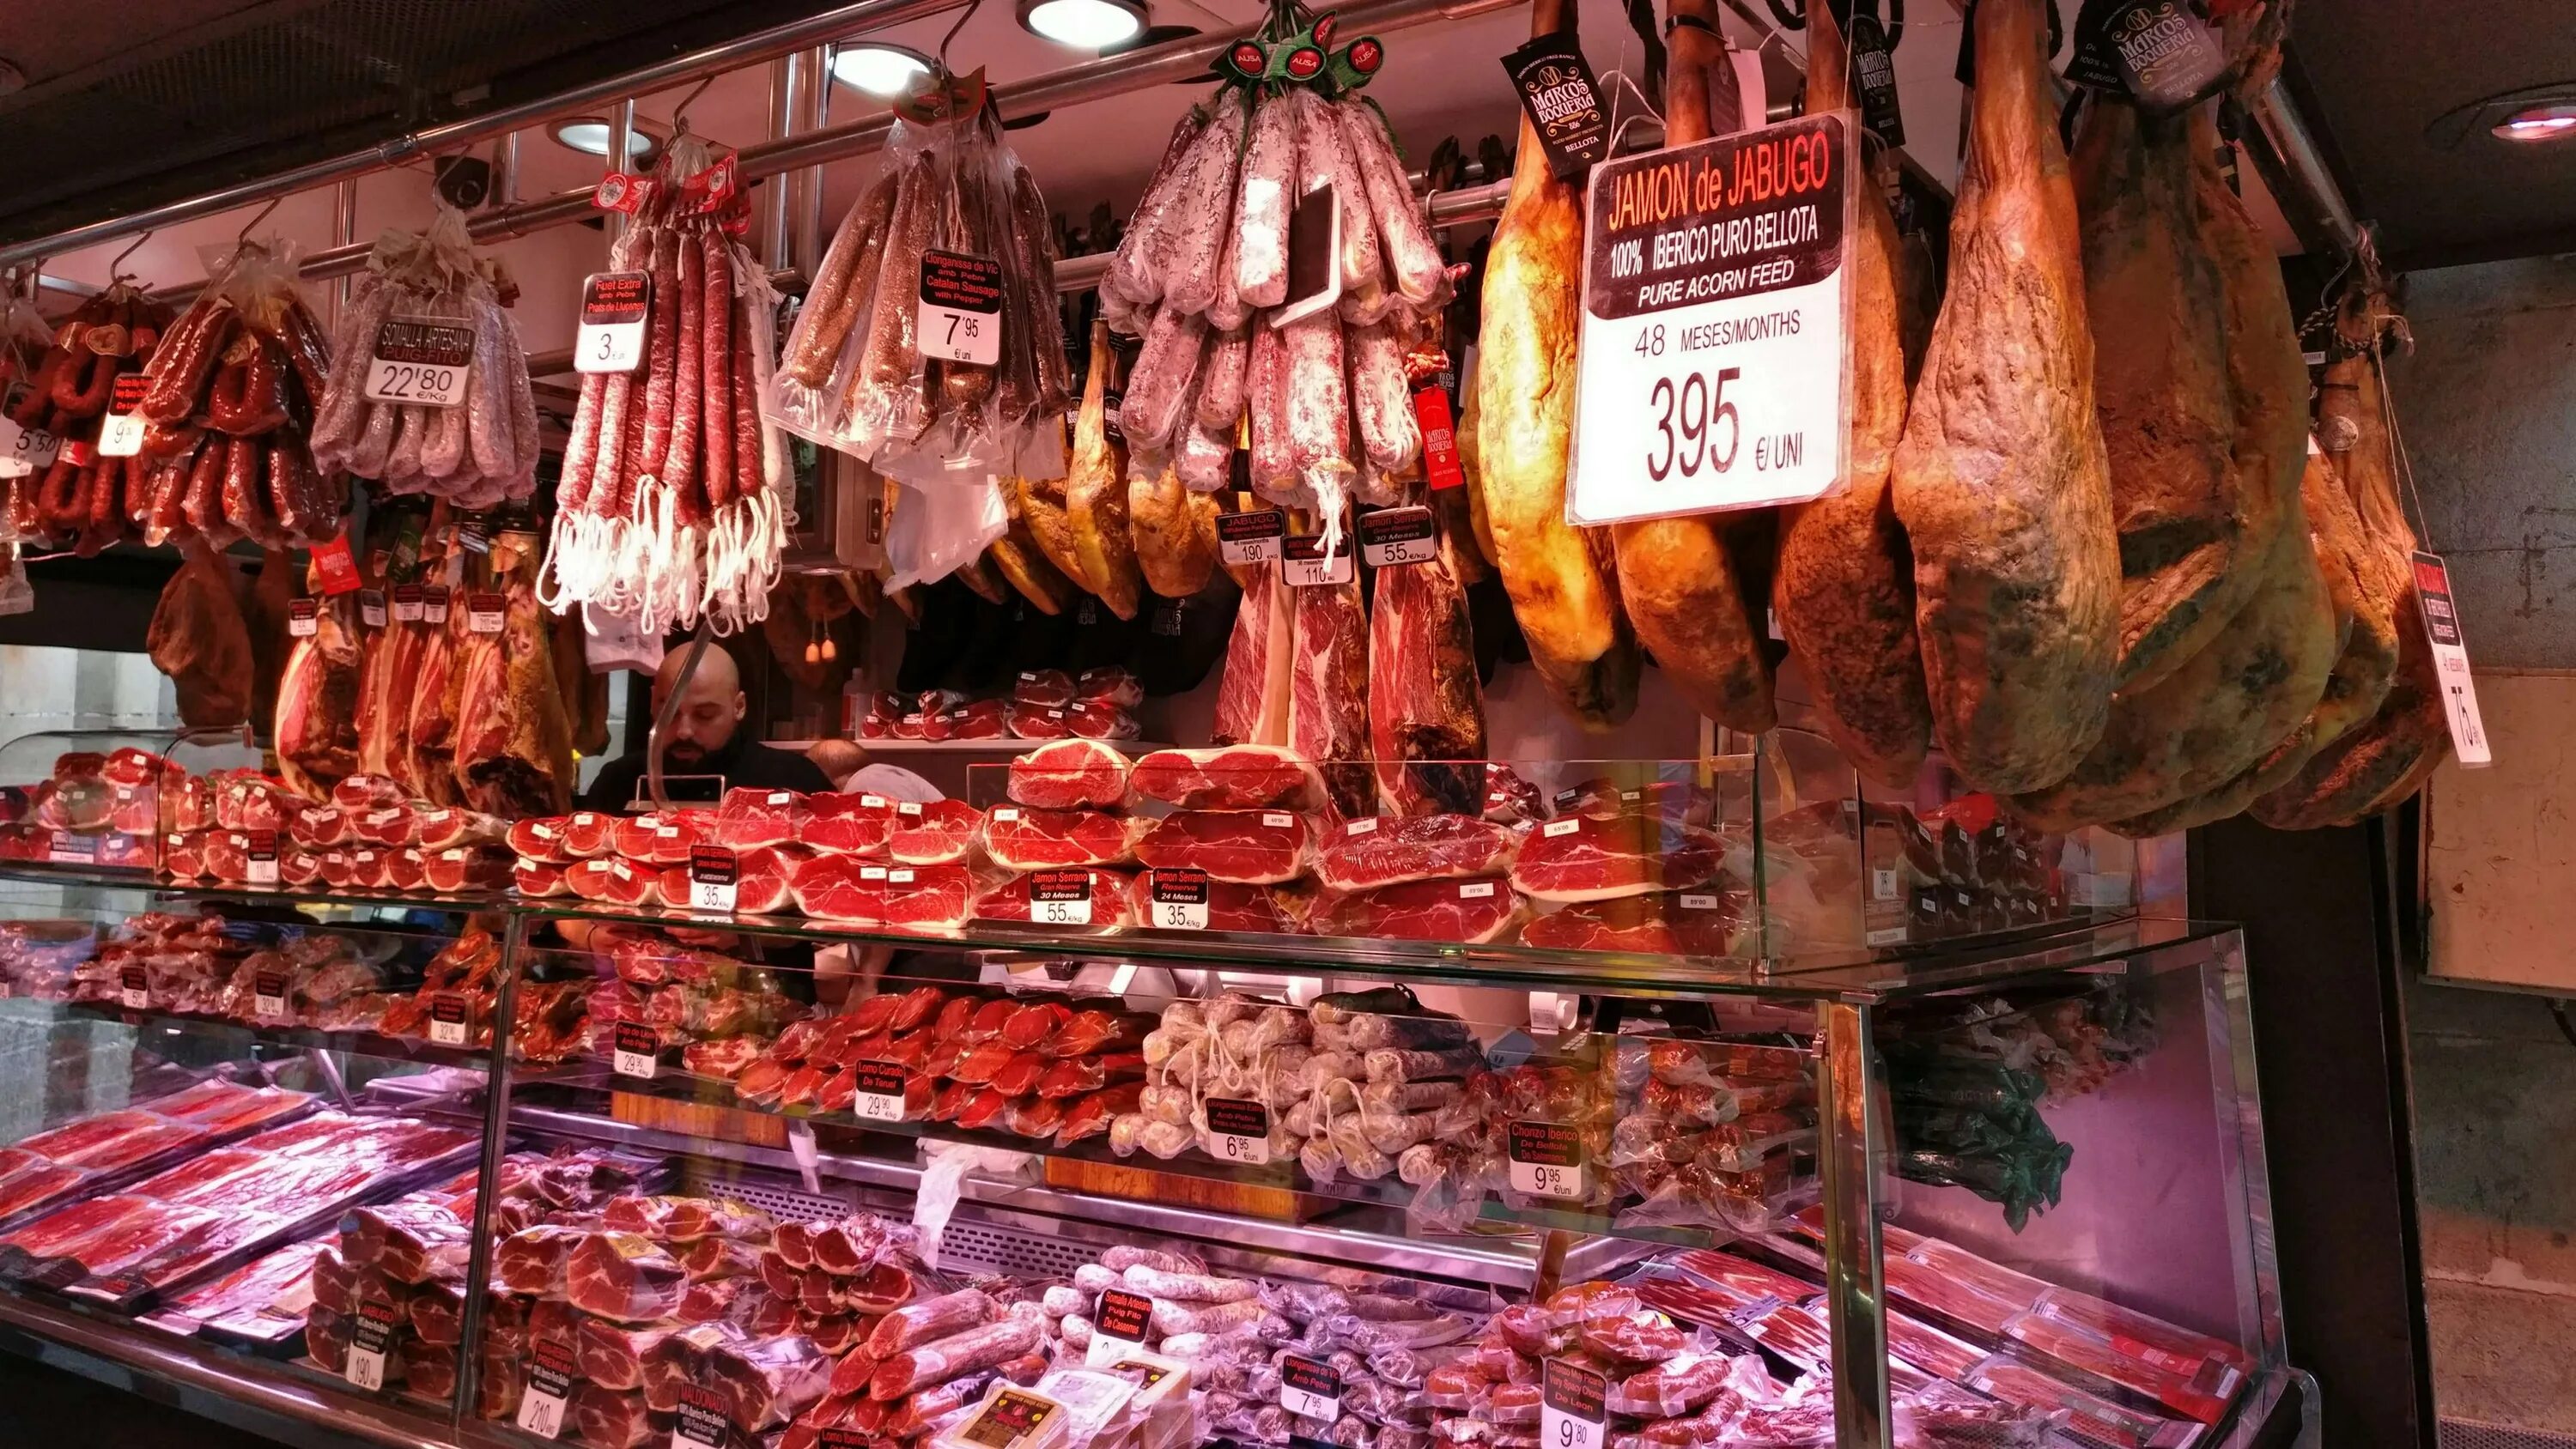 Warriors много мяса. Производство мясной продукции. Европейское агентство по безопасности продуктов питания. Мясо производство сельхоз красивое фото.